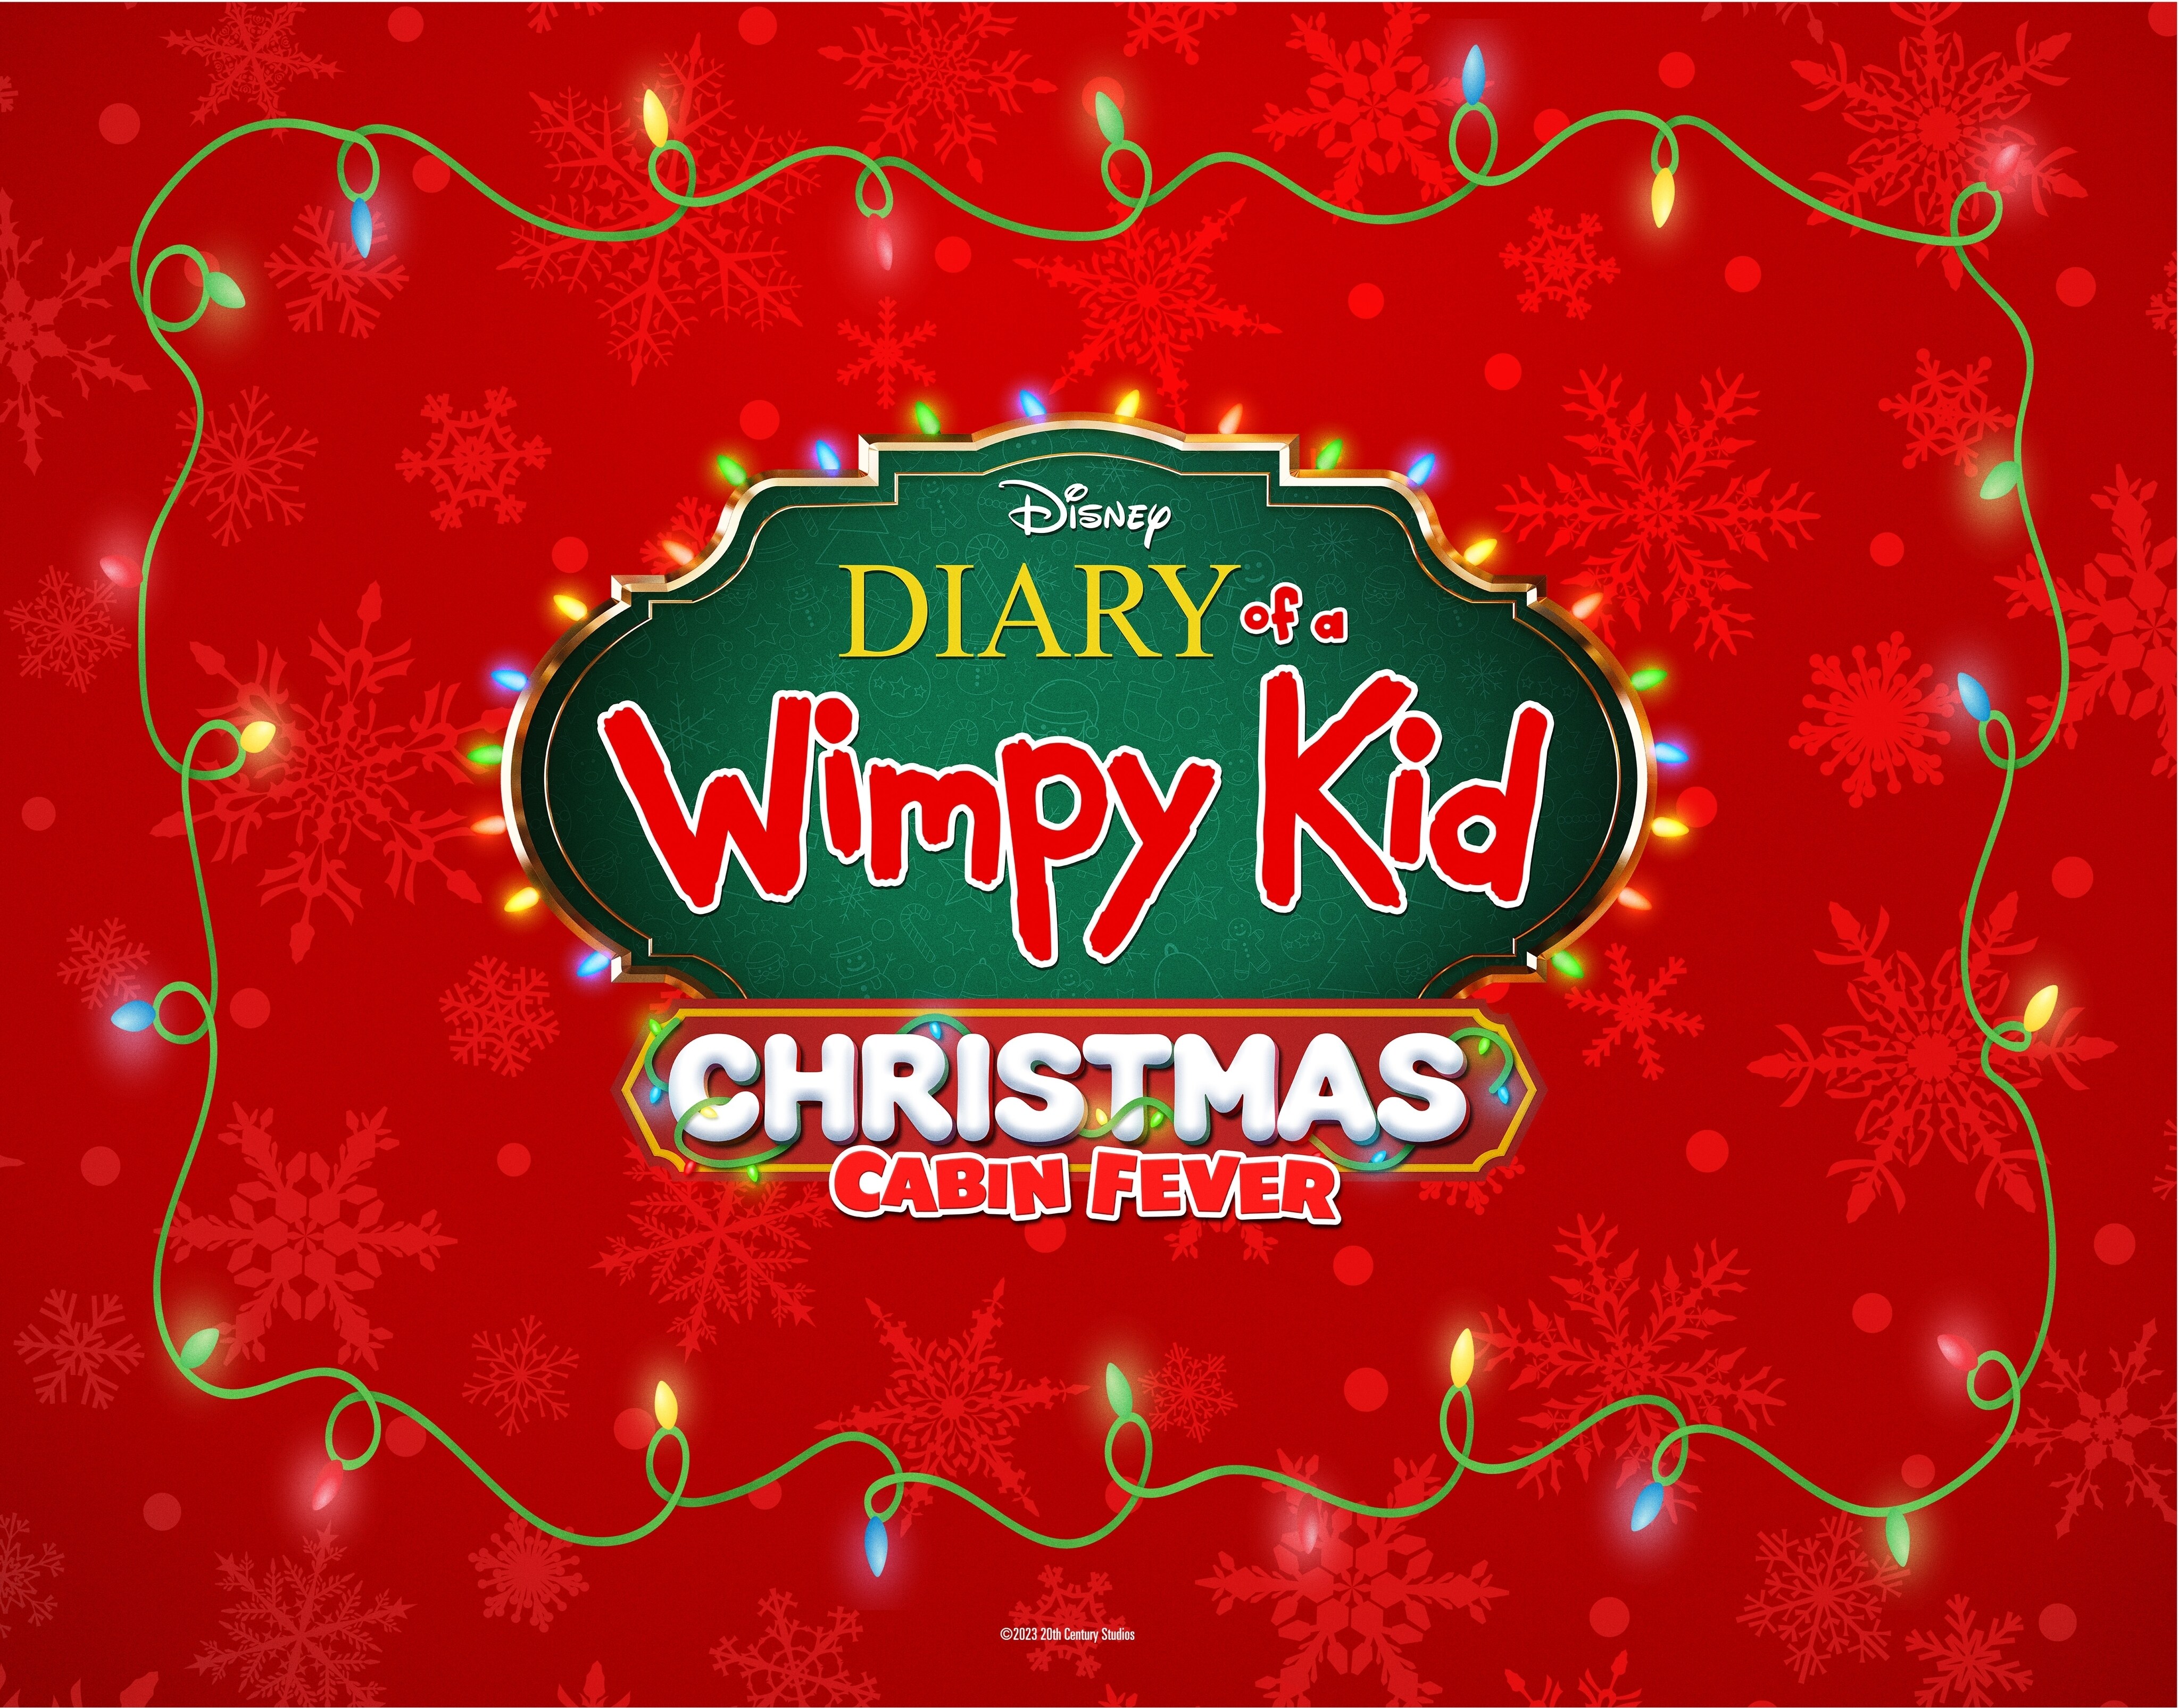 Disney Announces New DIARY OF A WIMPY KID Animated Movie RODRICK